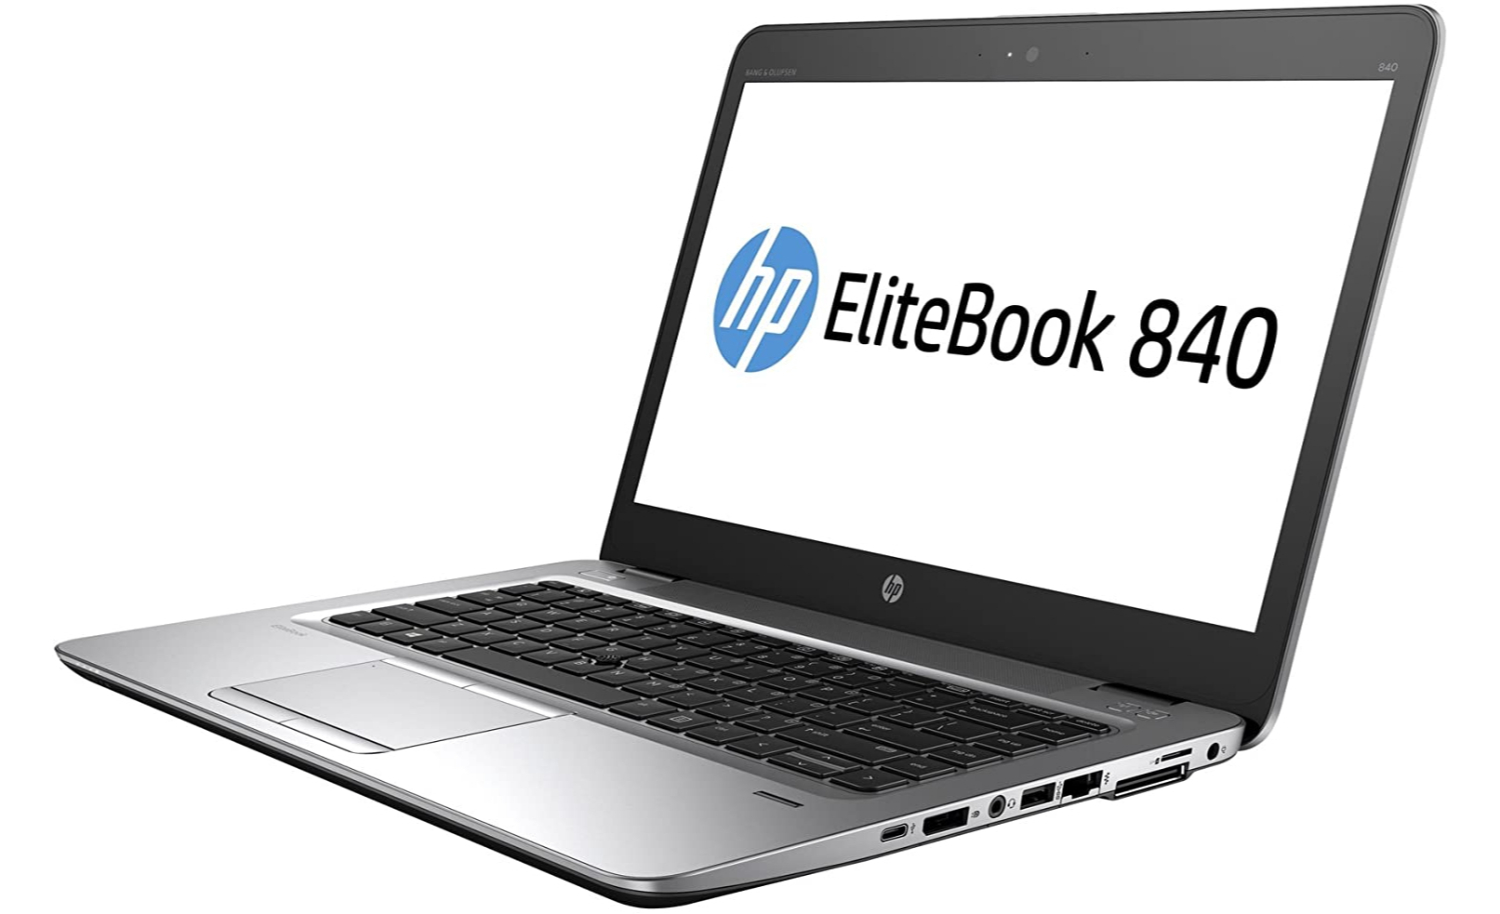 HP EliteBook 840 G1 Intel Core i5 4th Gen 8GB RAM 256GB SSD Windows 10 Pro